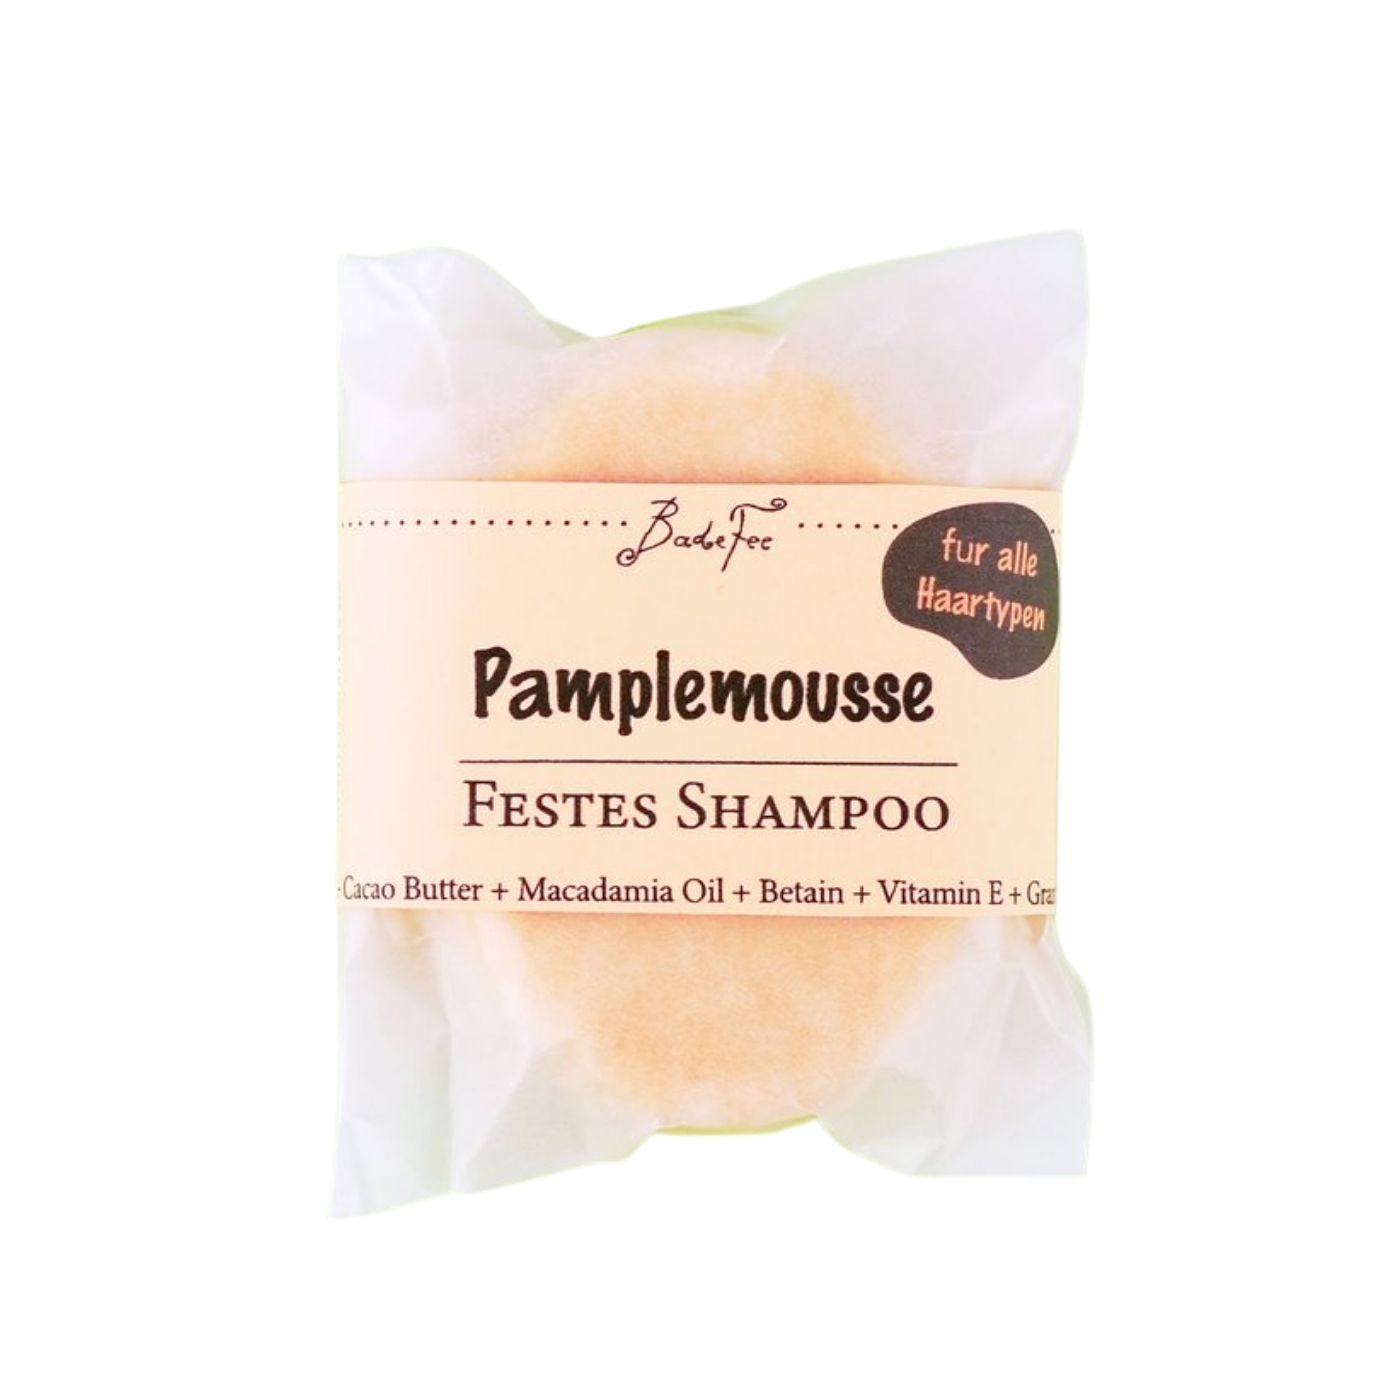 BadeFee Festes Shampoo Pamplemousse - Antioxidativ, vegan